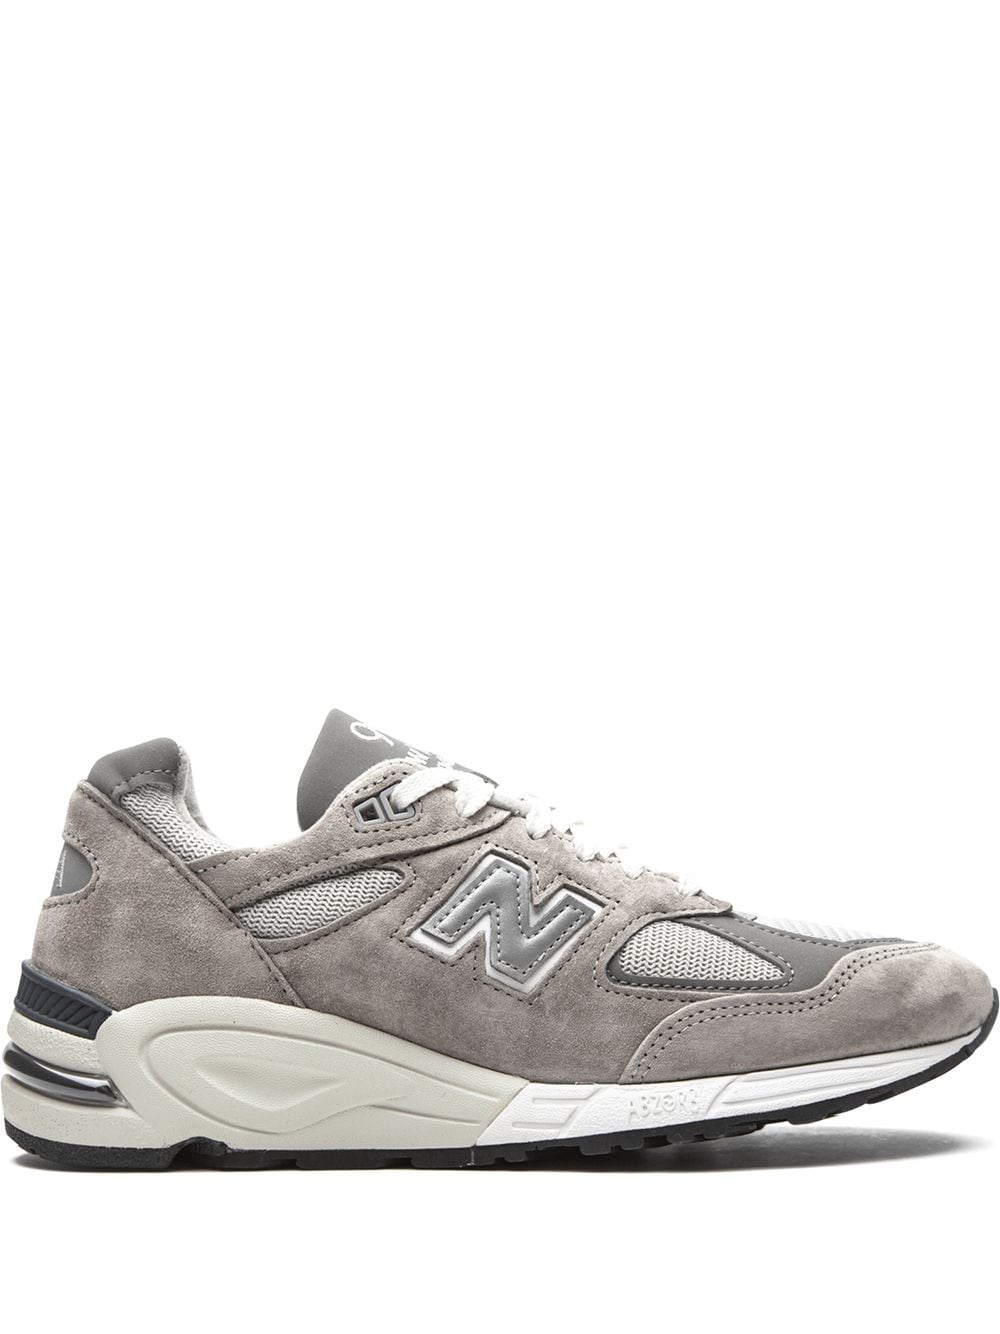 New Balance M990Gr2 "Grey" sneakers von New Balance